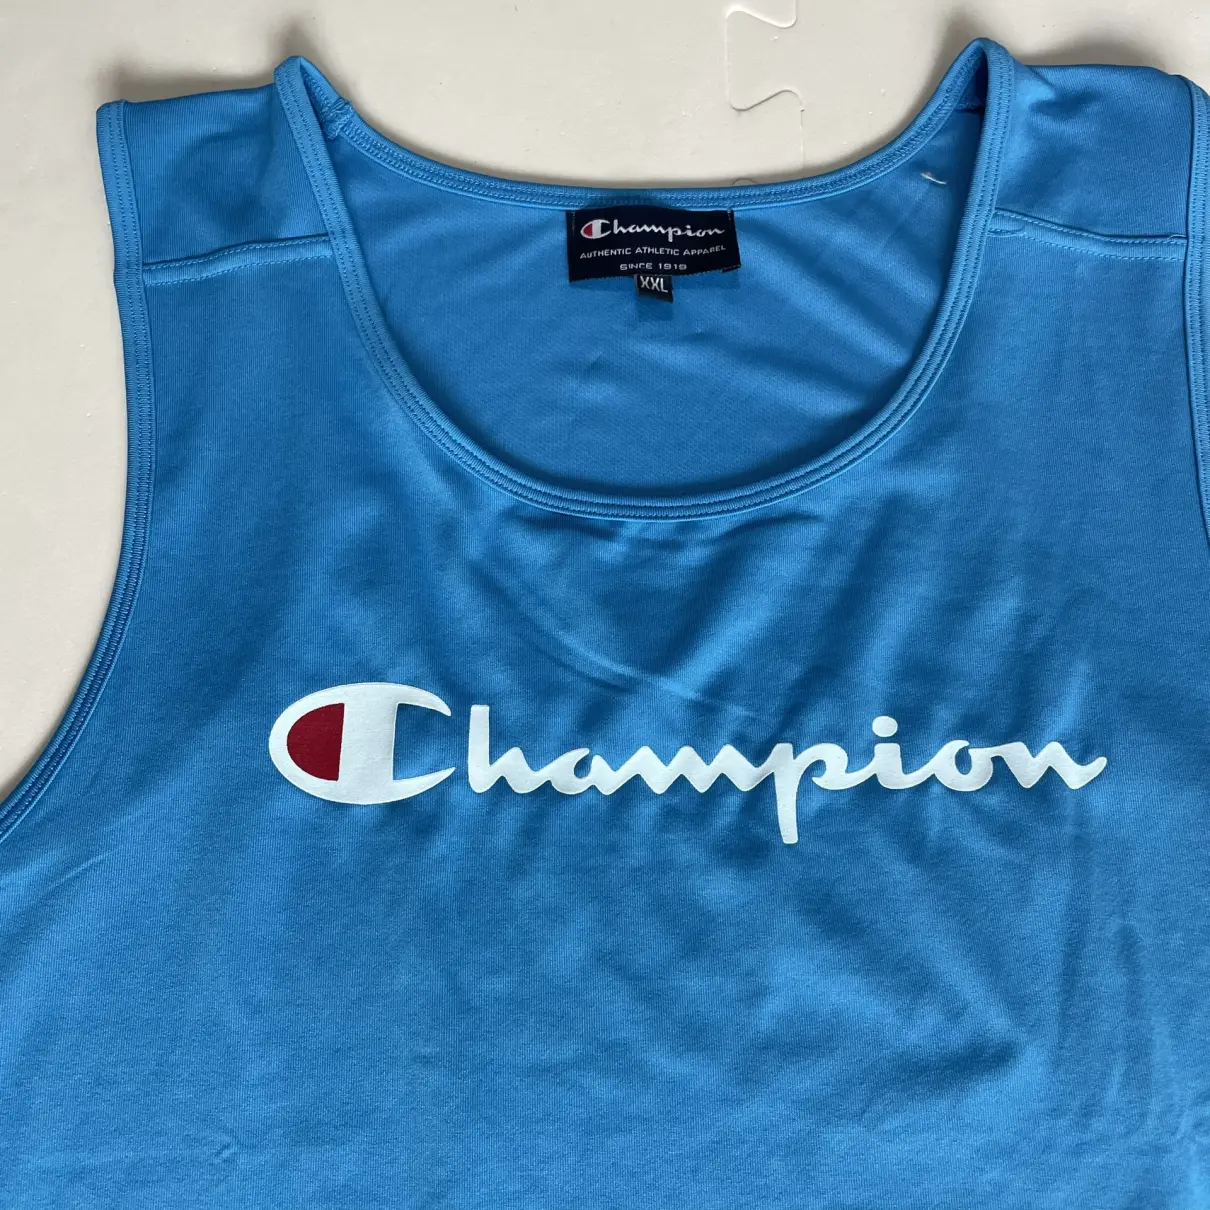 Buy Champion T-shirt online